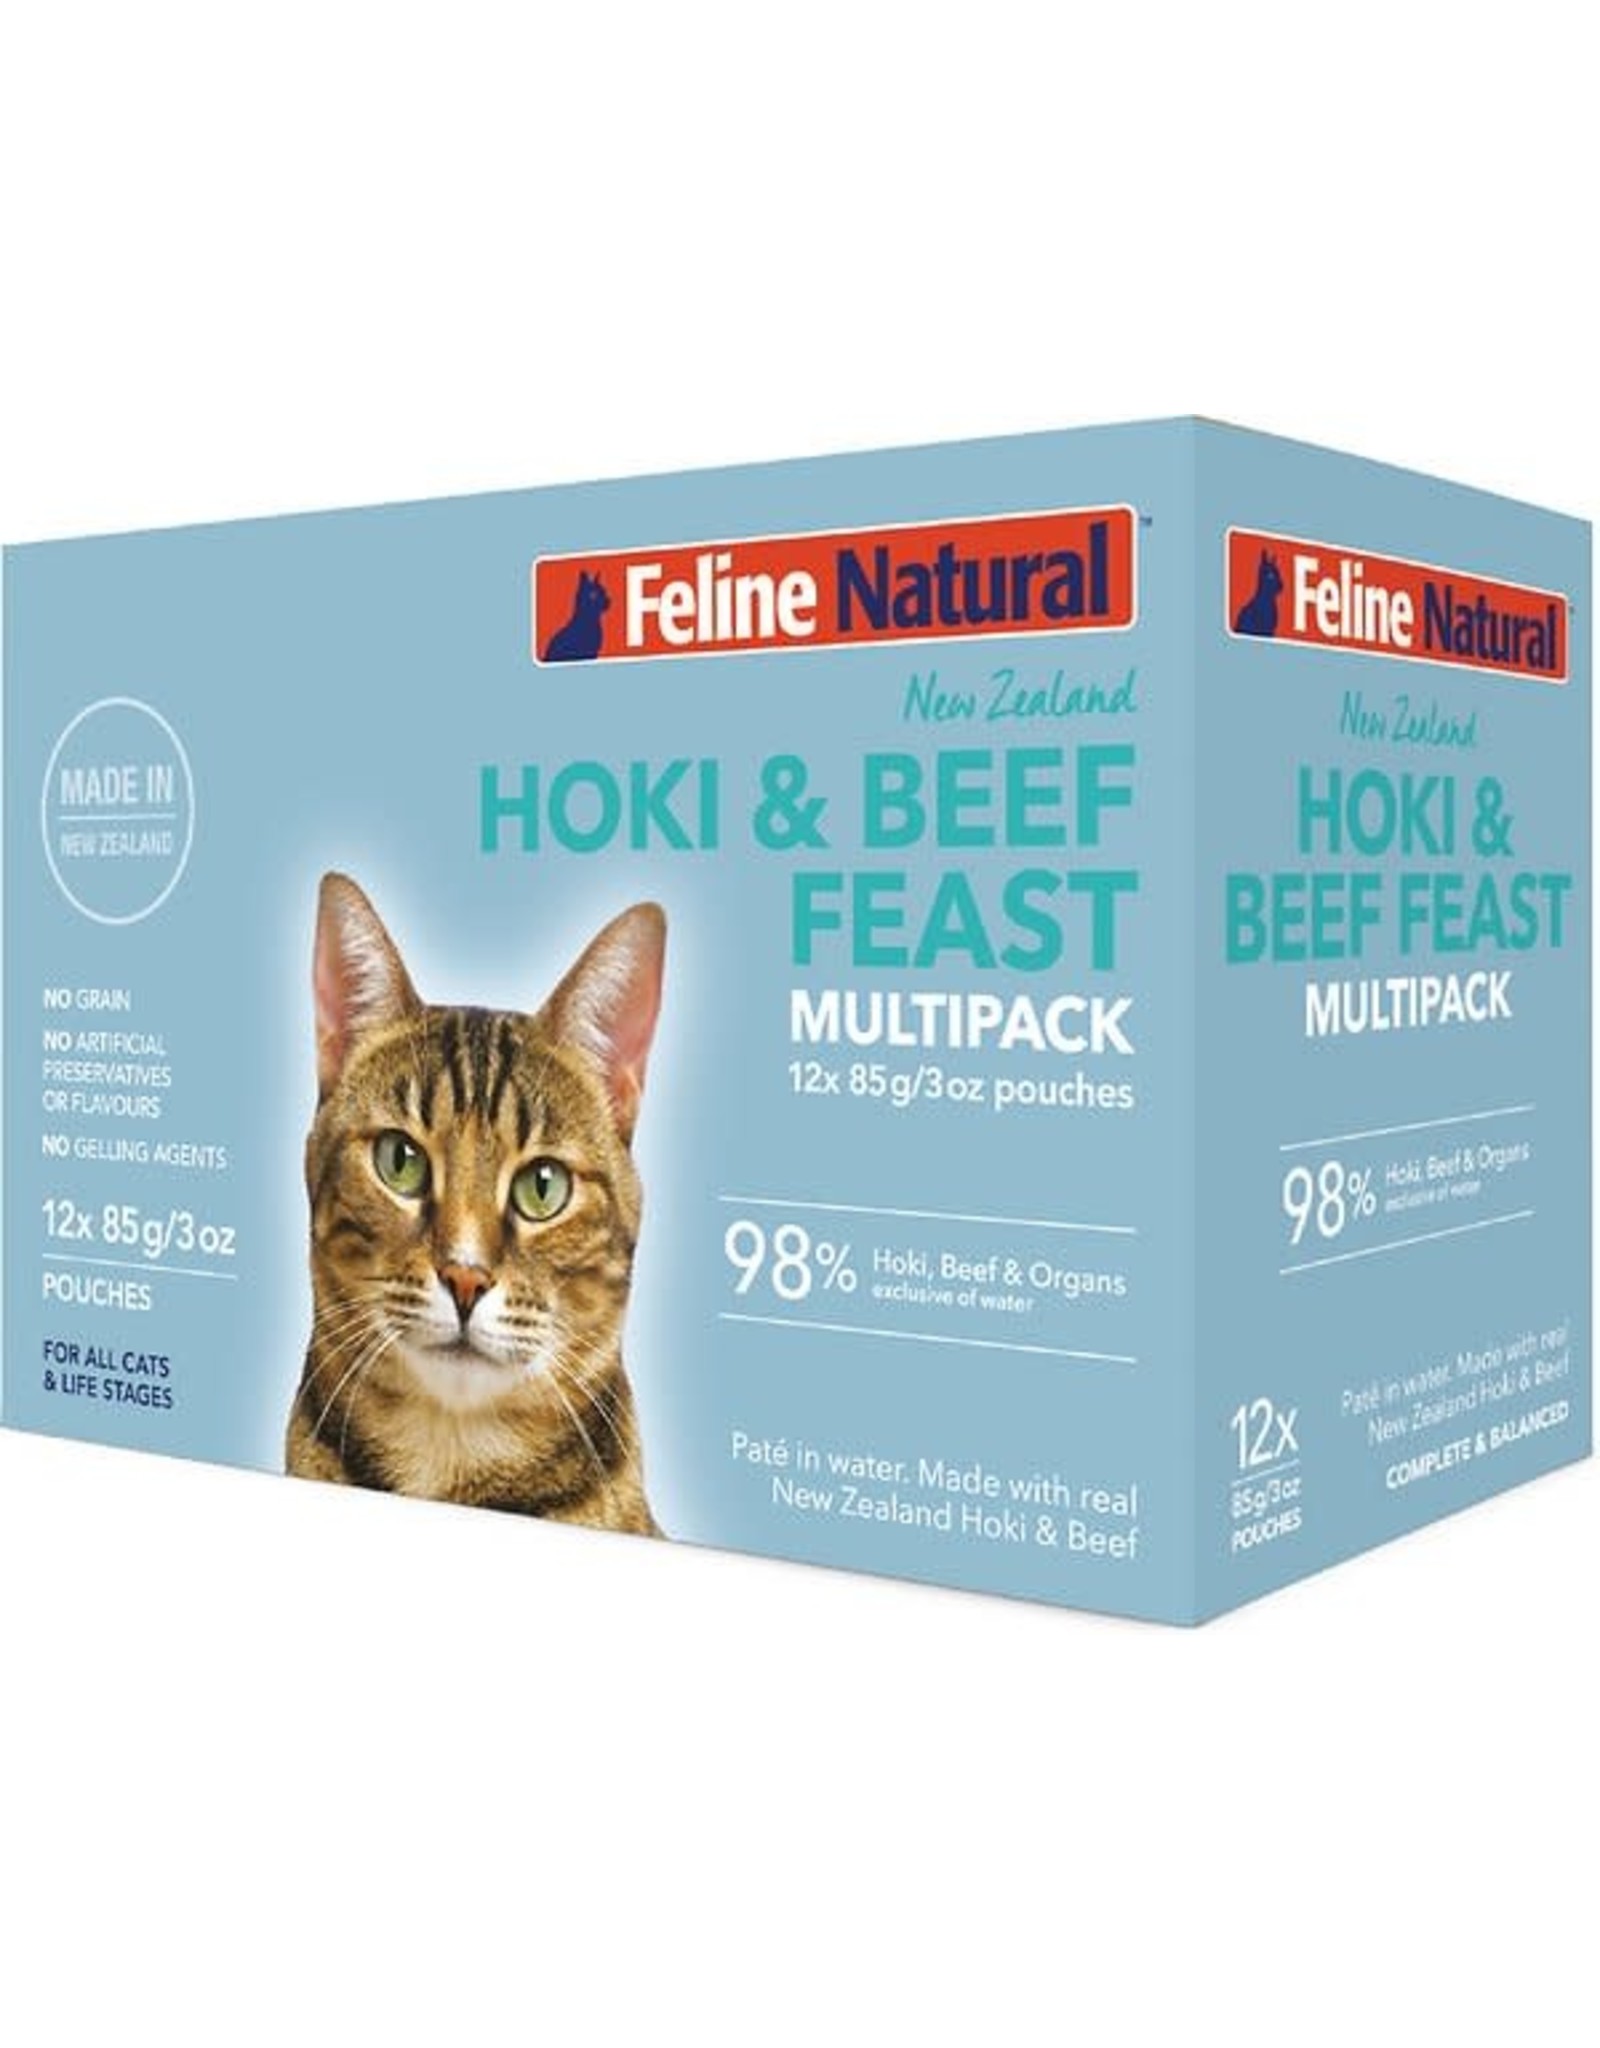 K9 Natural Feline Natural Hoki & Beef Feast Cat Food 3oz Pouch